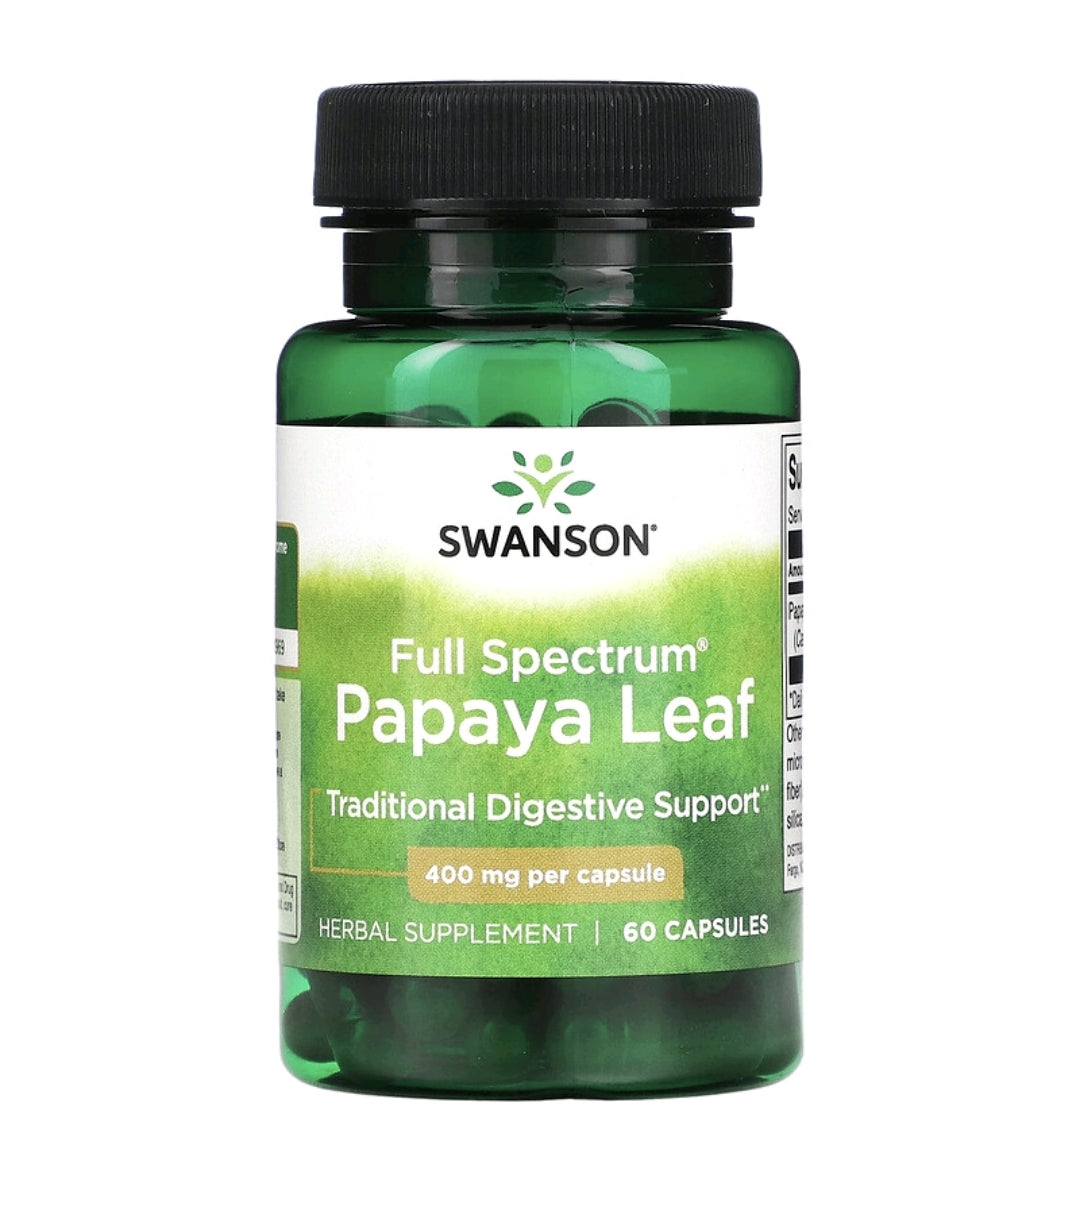 Full Spectrum Papaya Leaf, 400 mg, 60 Capsules